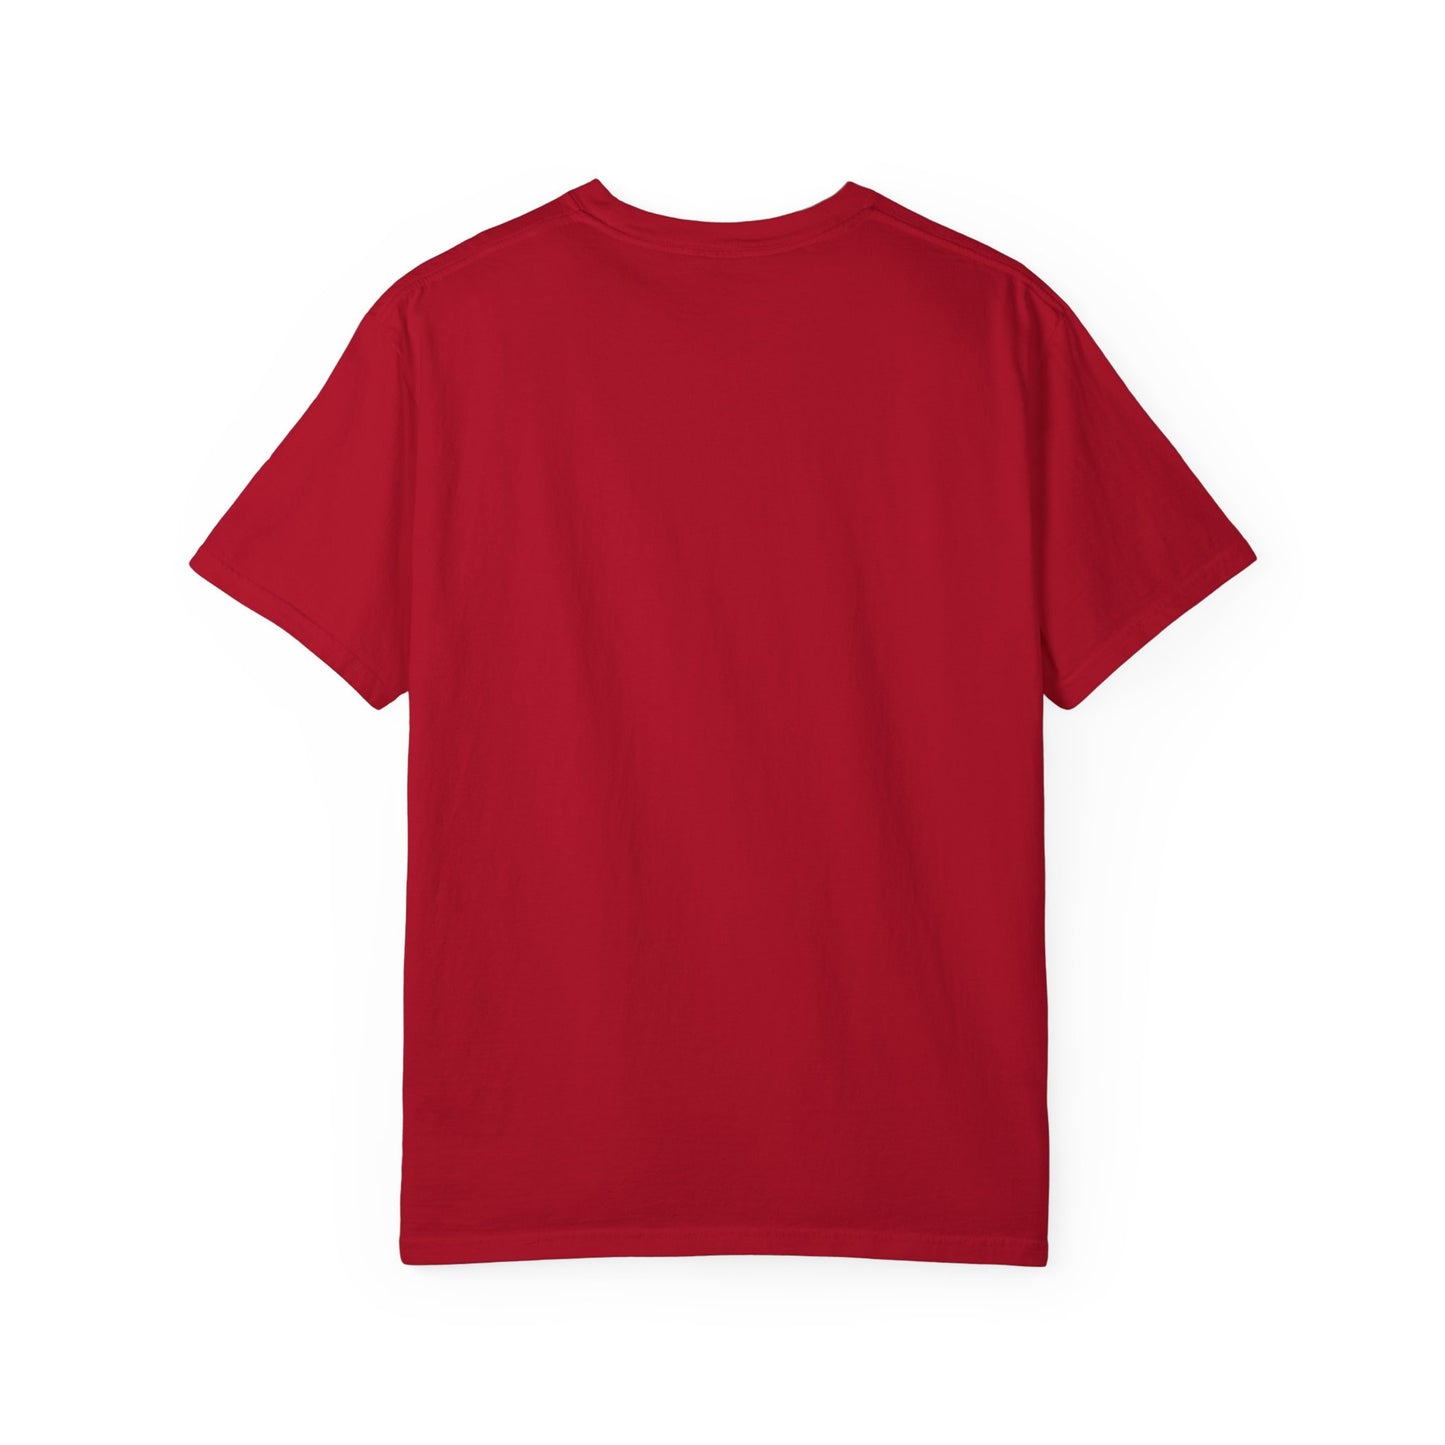 Shit Show Supervisor Urban Sarcastic Graphic Unisex Garment Dyed T-shirt Cotton Funny Humorous Graphic Soft Premium Unisex Men Women Red T-shirt Birthday Gift-19